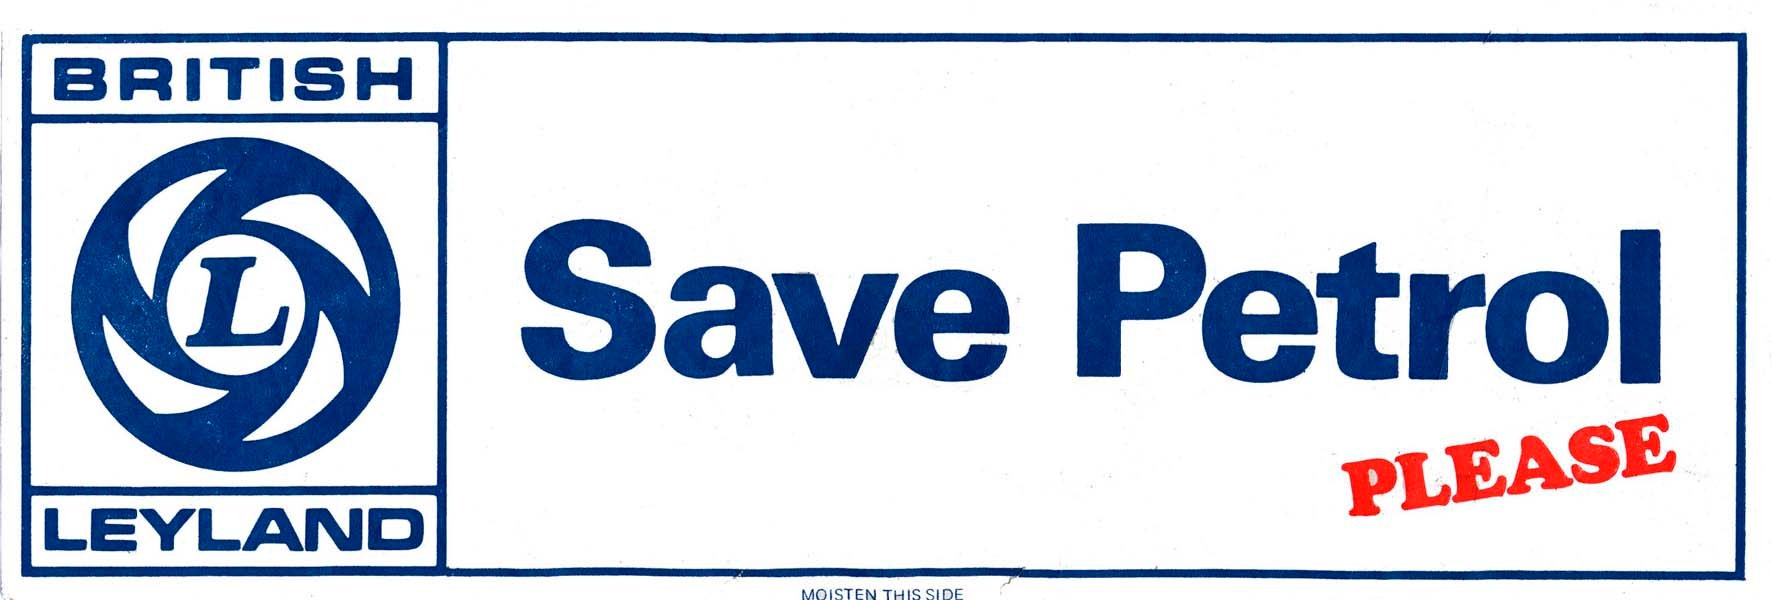 00-BL Save Petrol Please Sticker-1